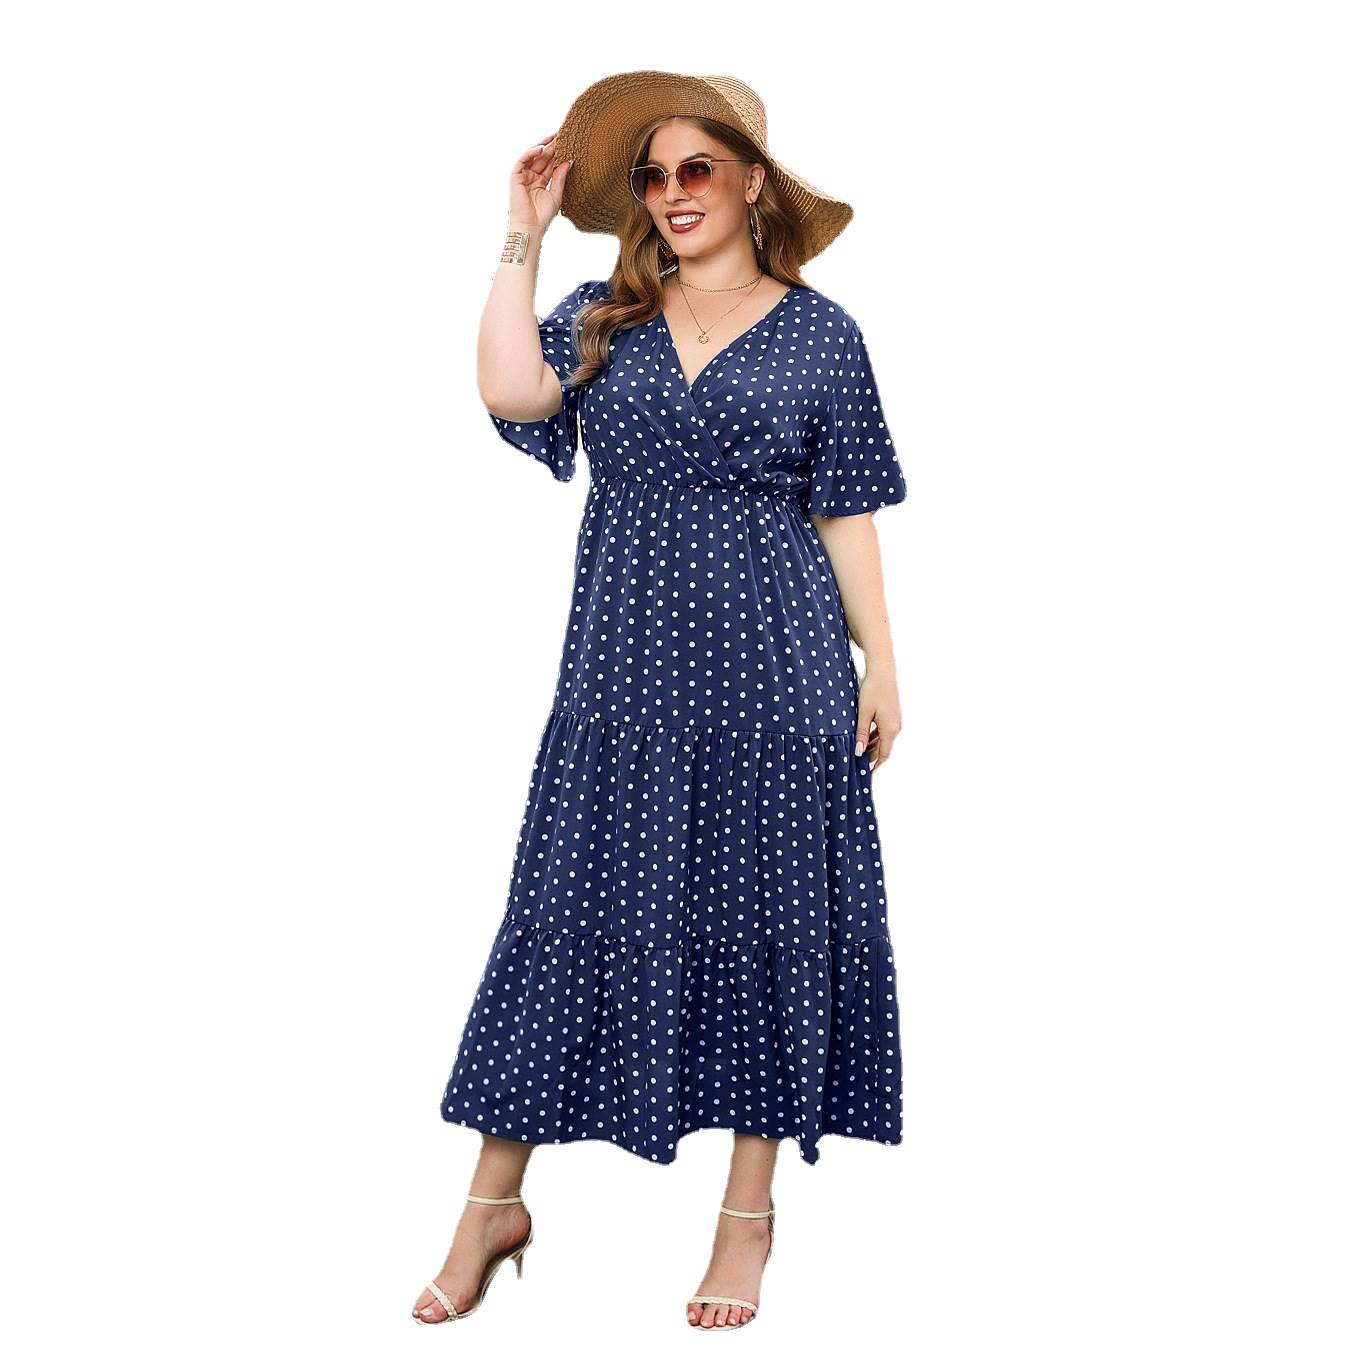 Plus-size Women's Plus-size Polka Dot Casual Holiday Dress